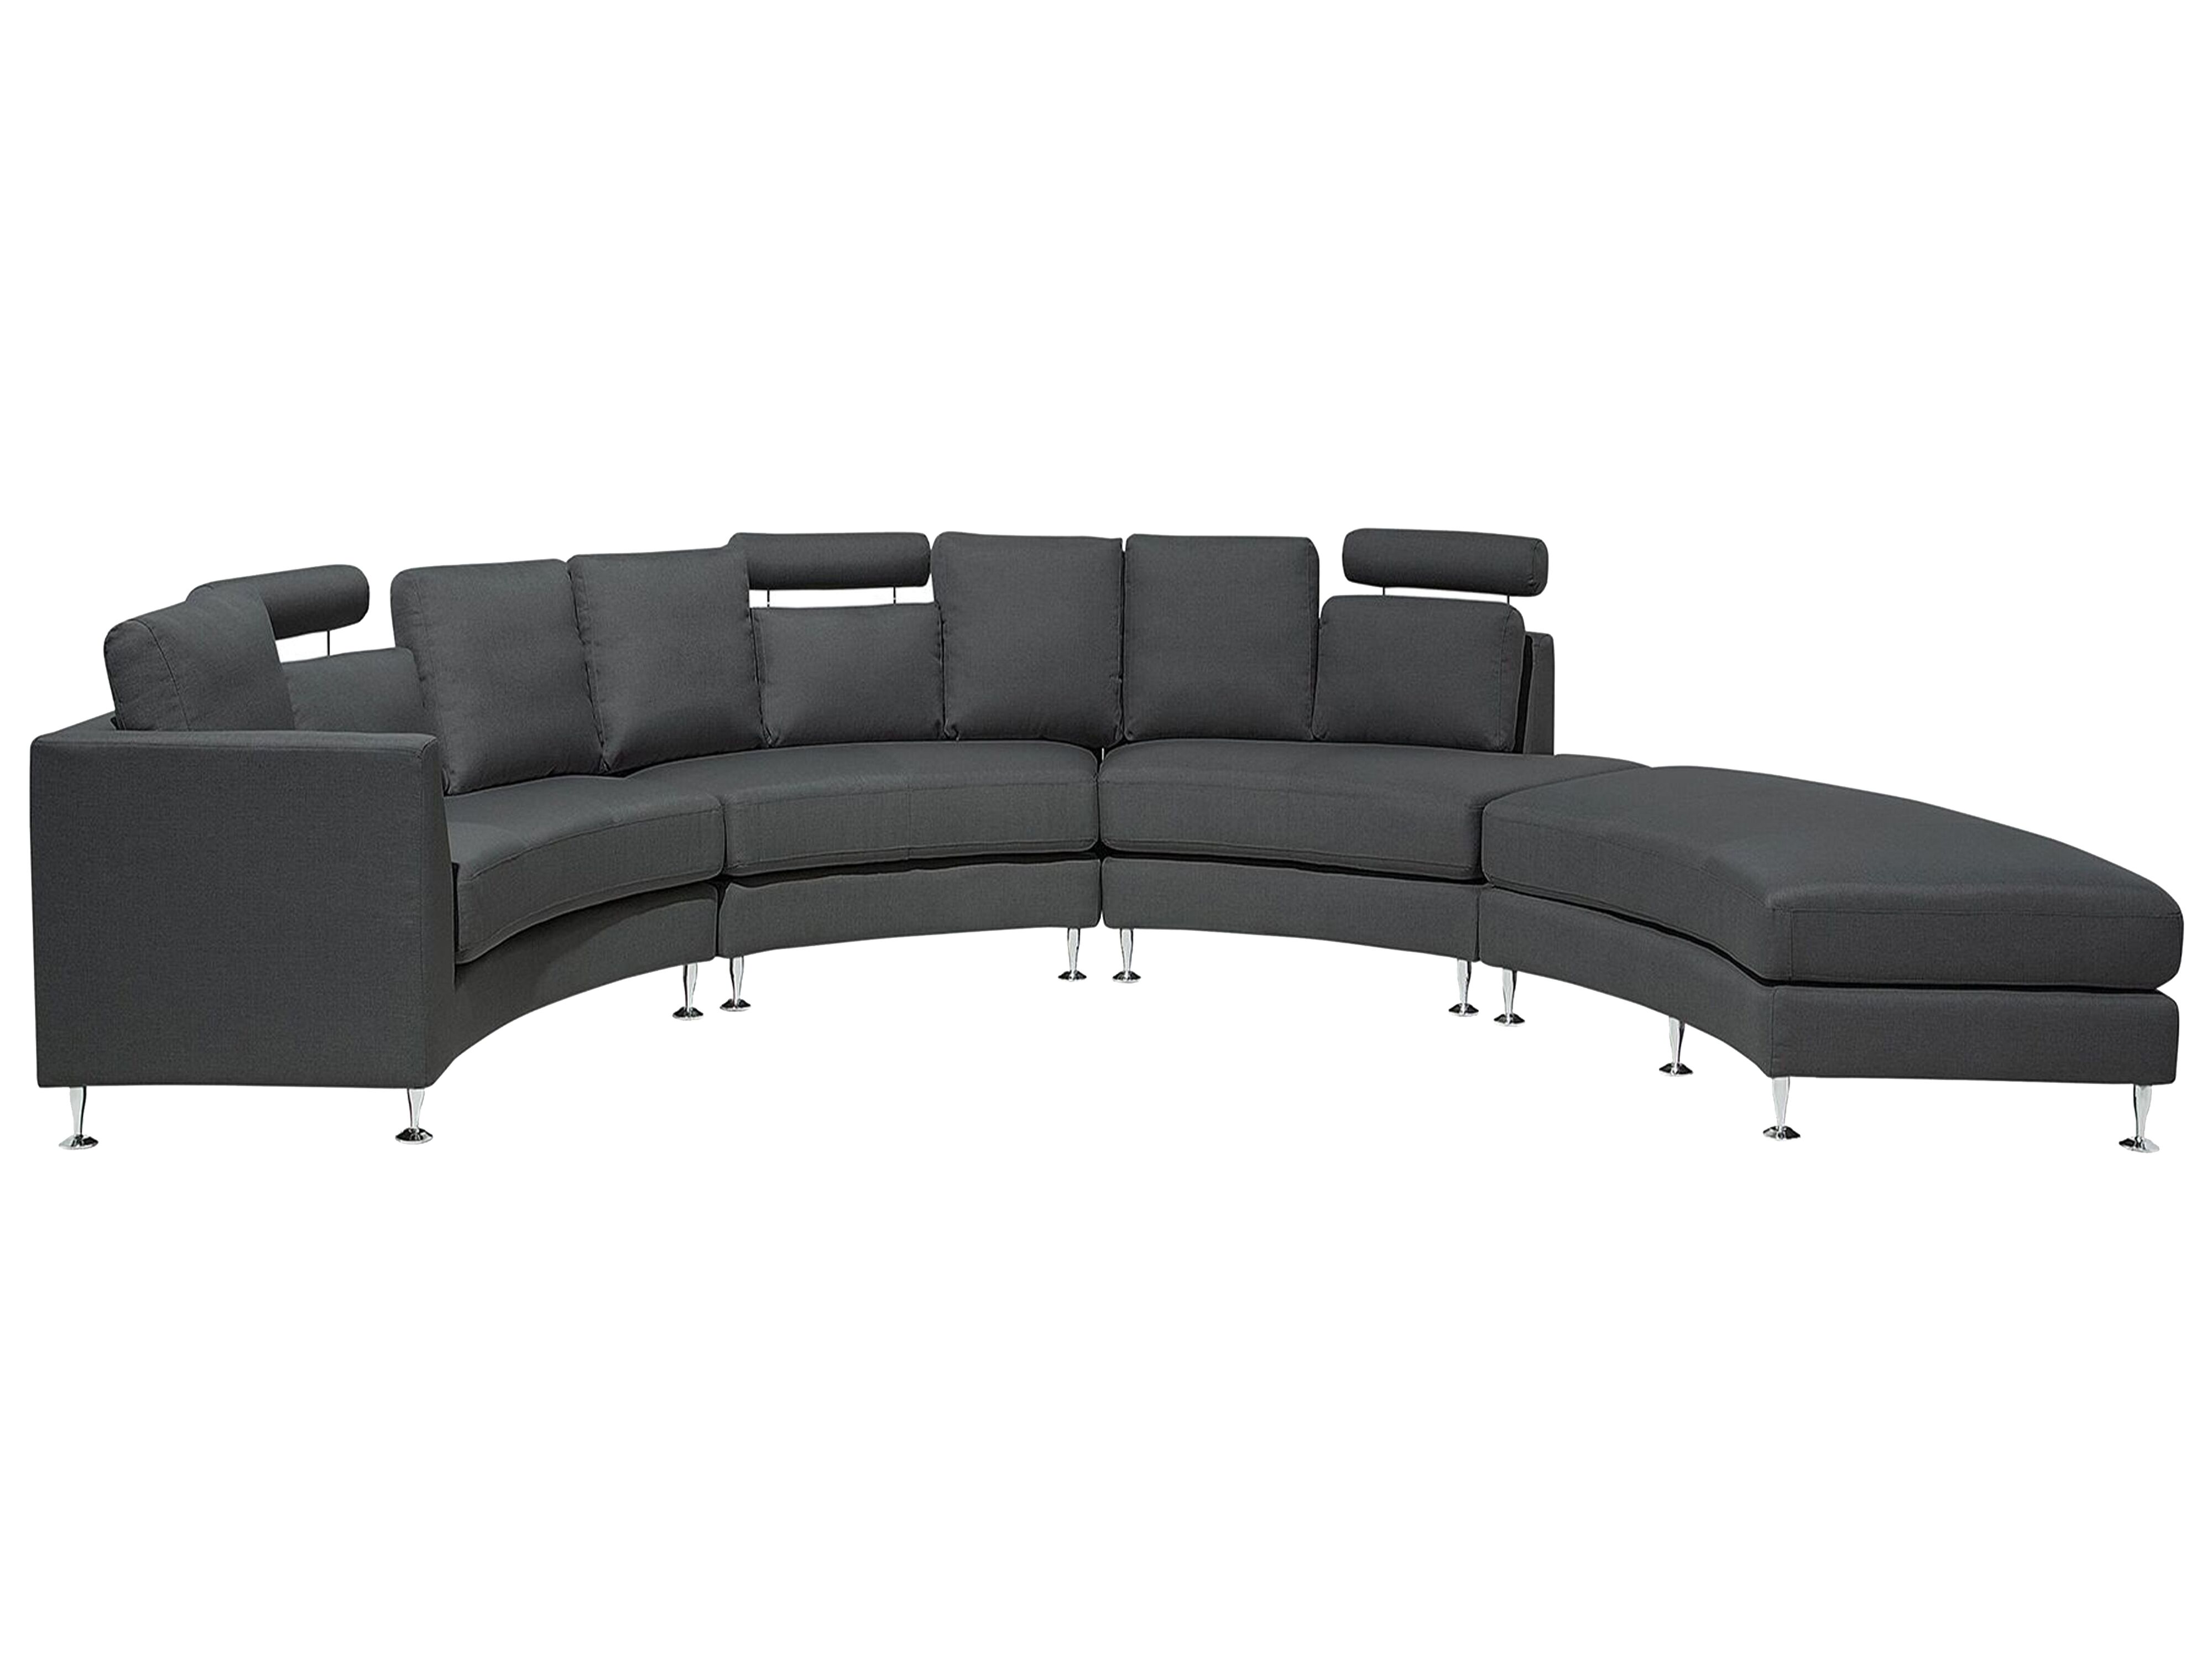 7 Seater Curved Fabric Modular Sofa